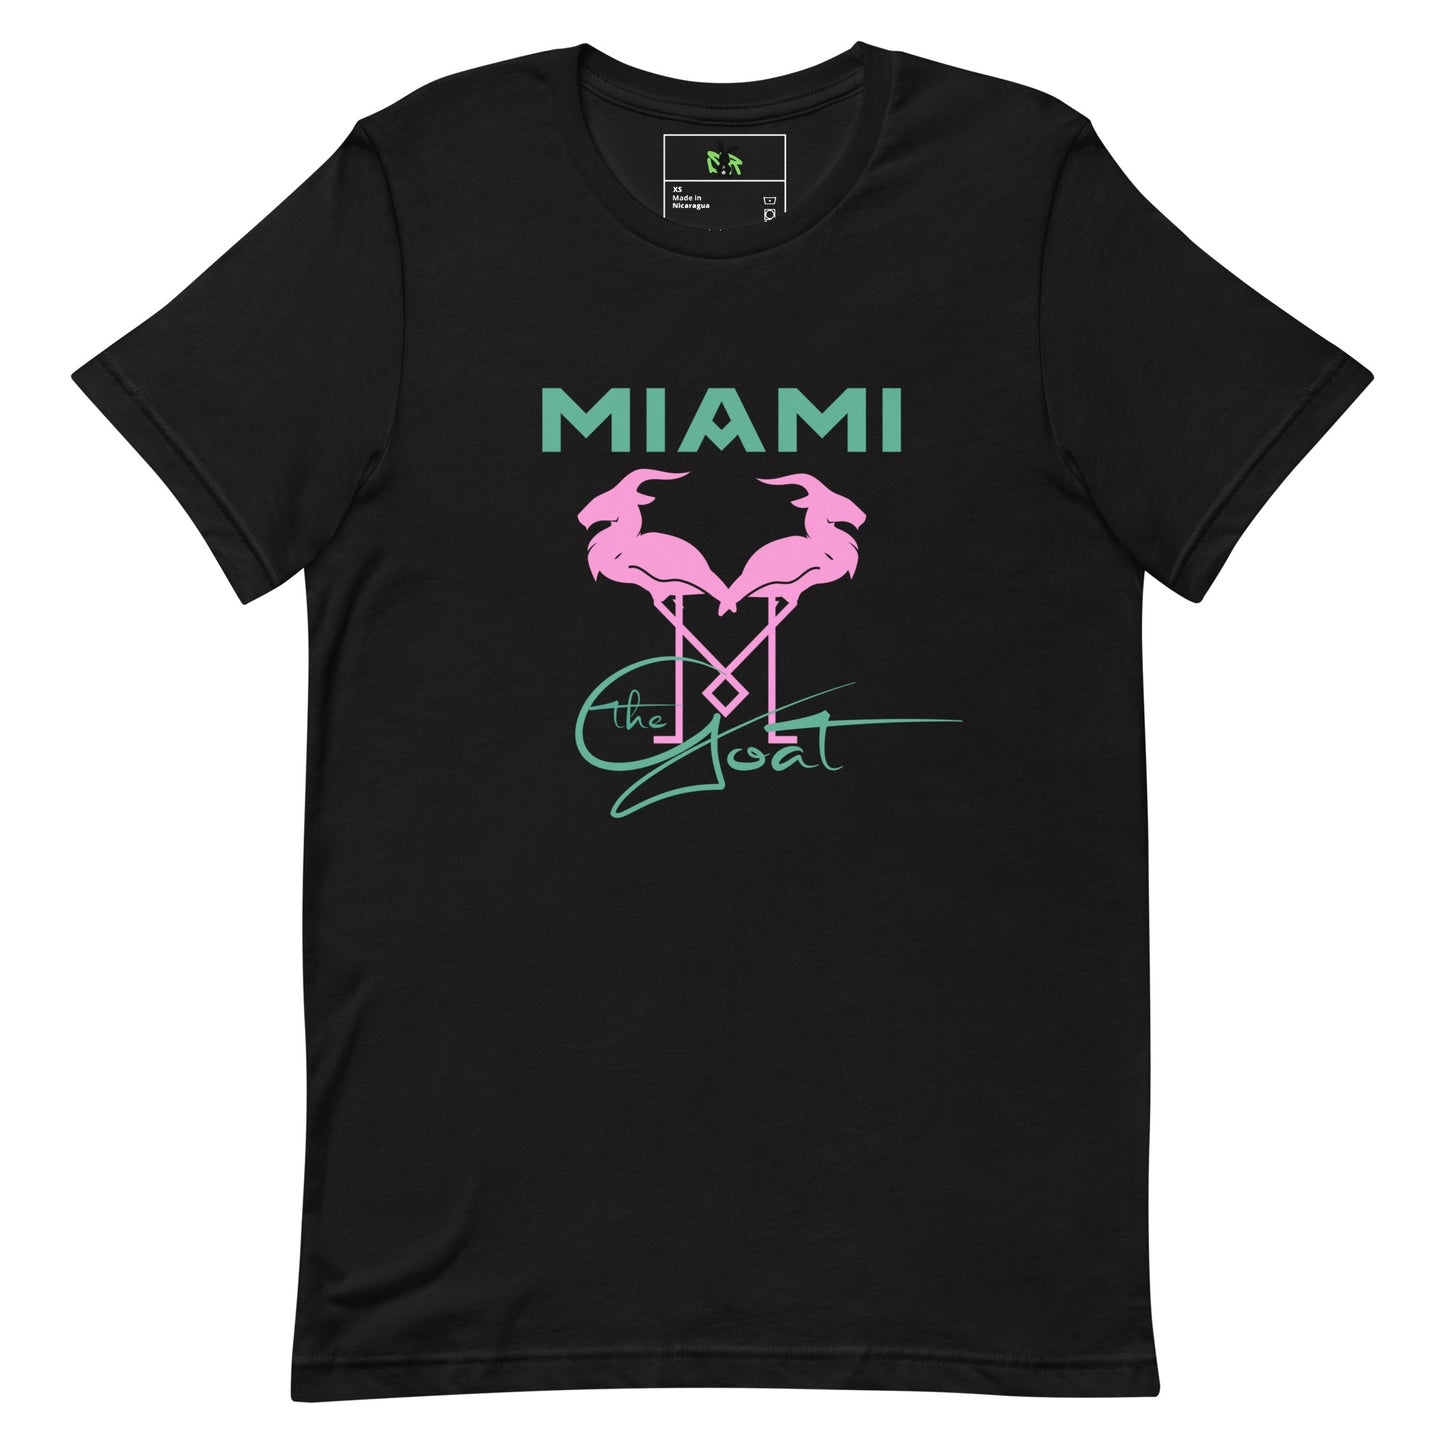 The Miami Goat